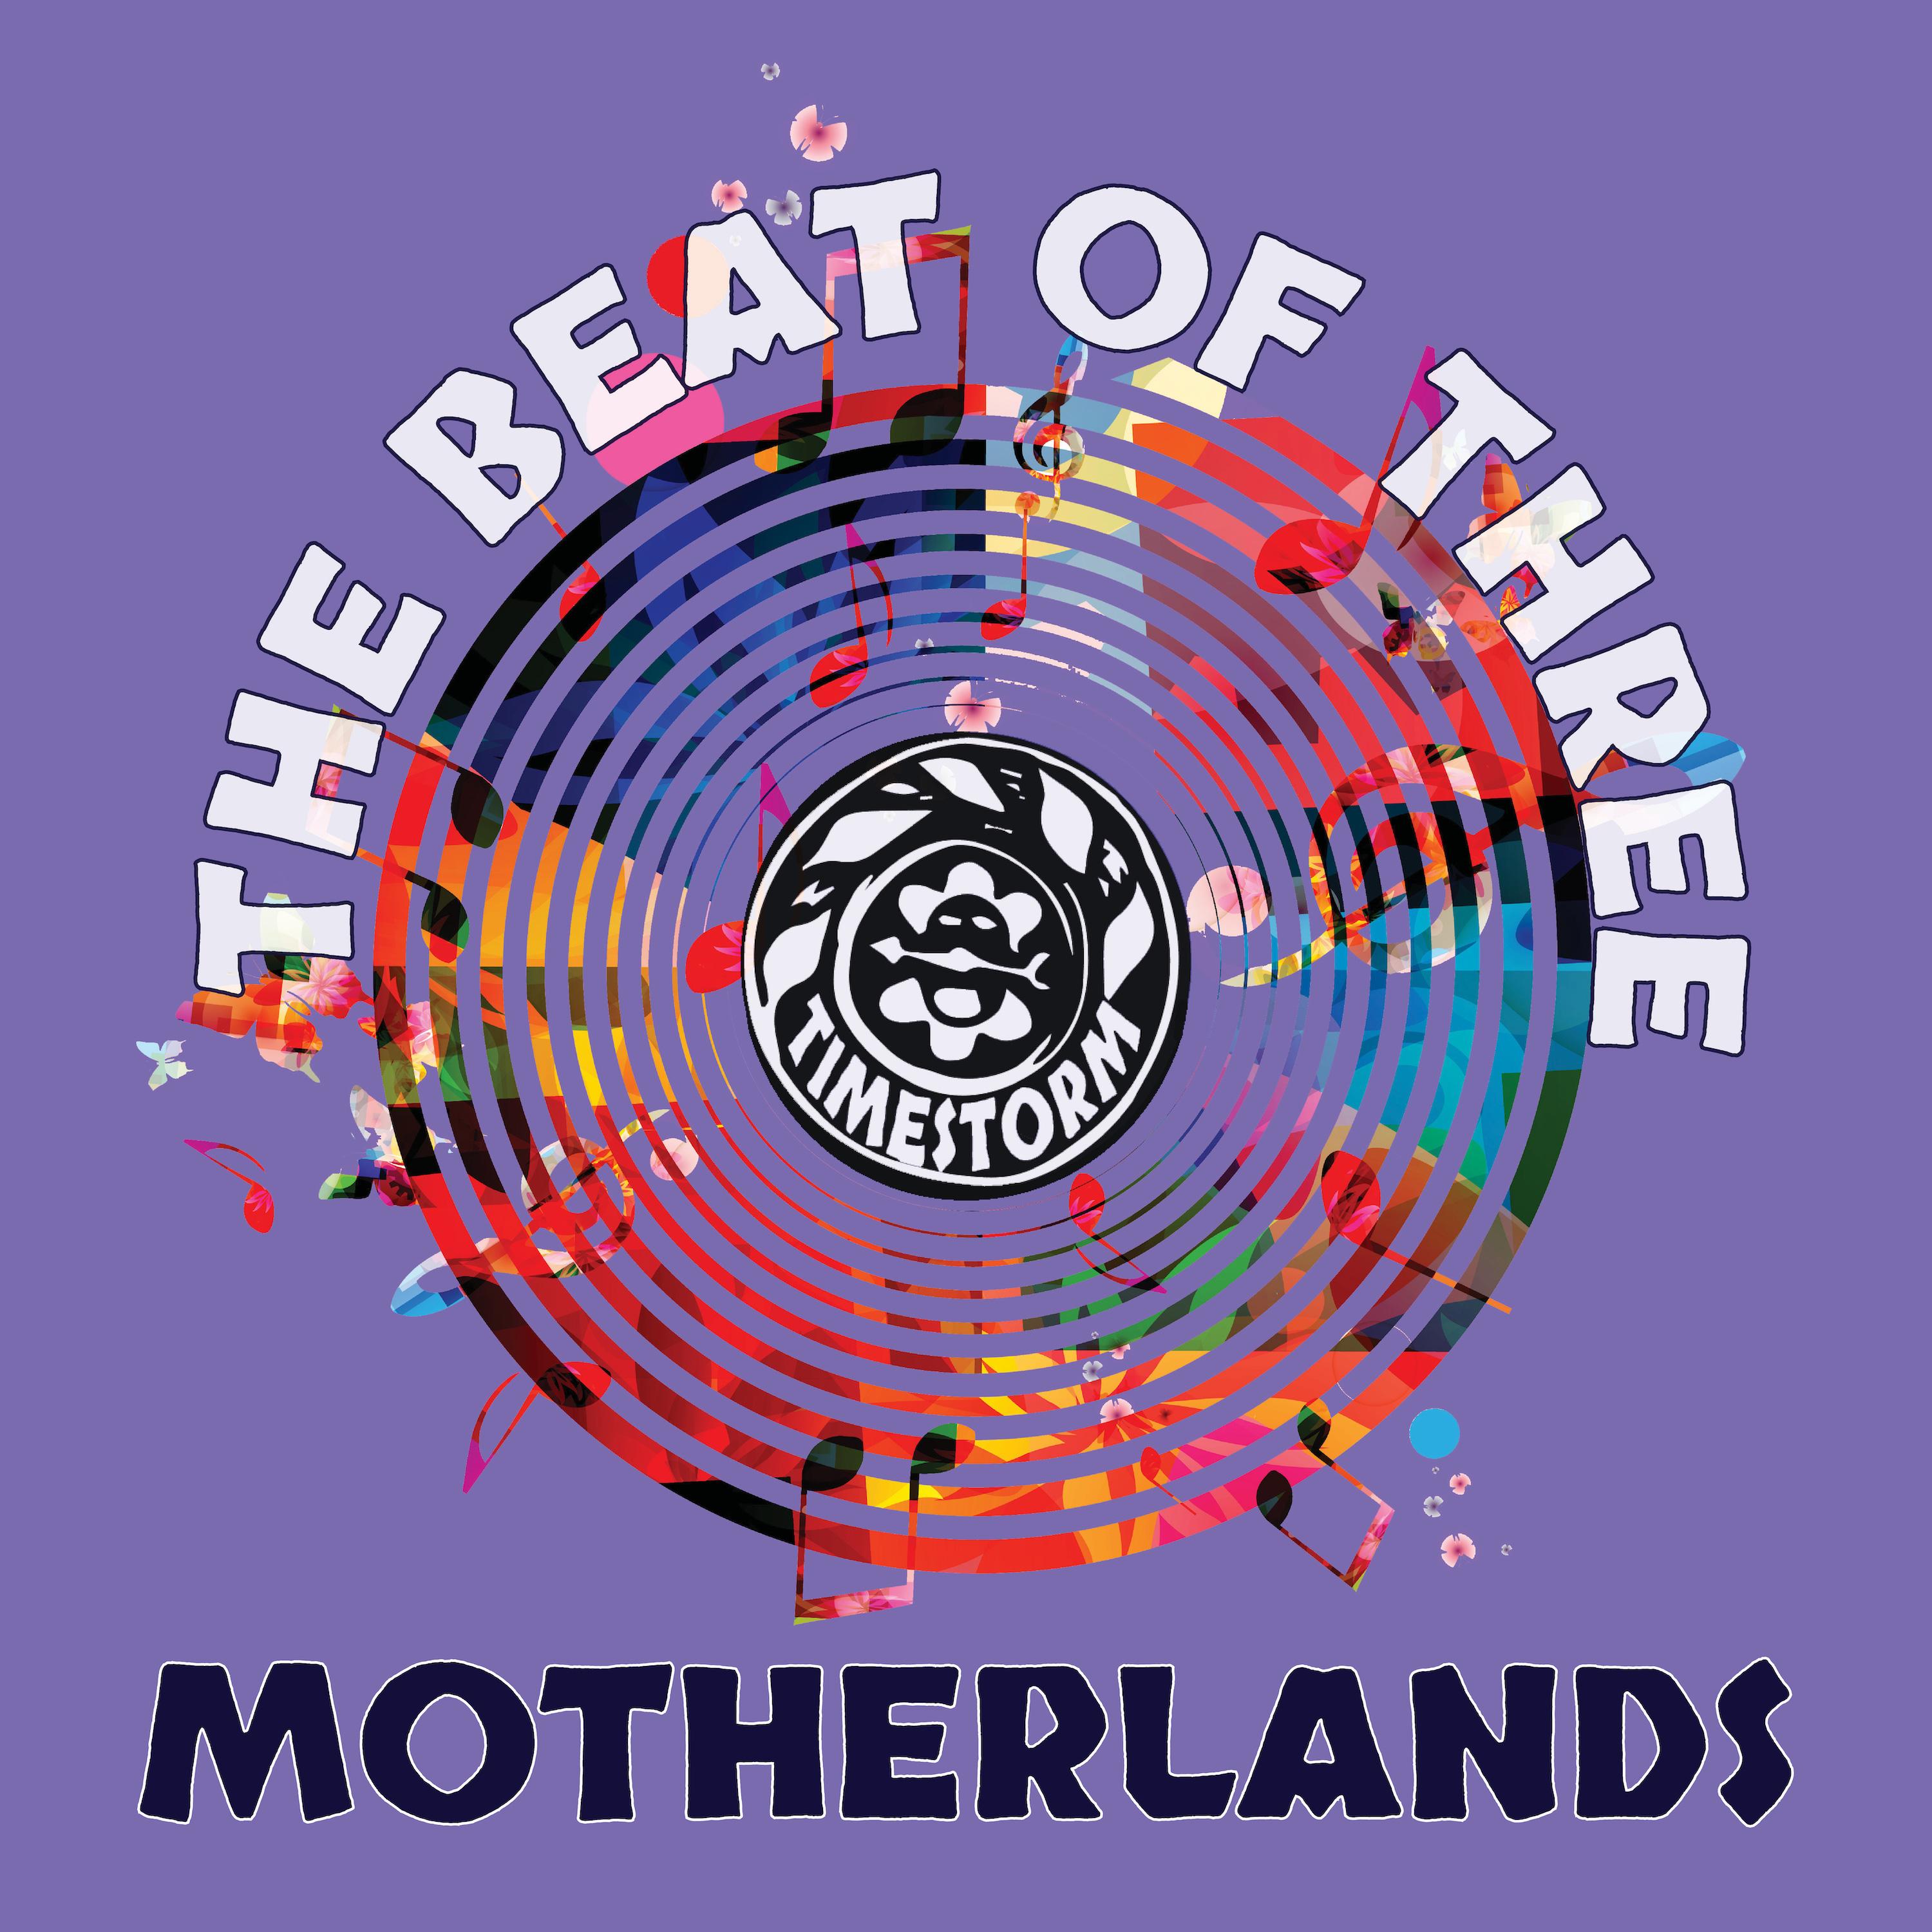 Thumbnail for "Bonus: The Beat of Three Motherlands".